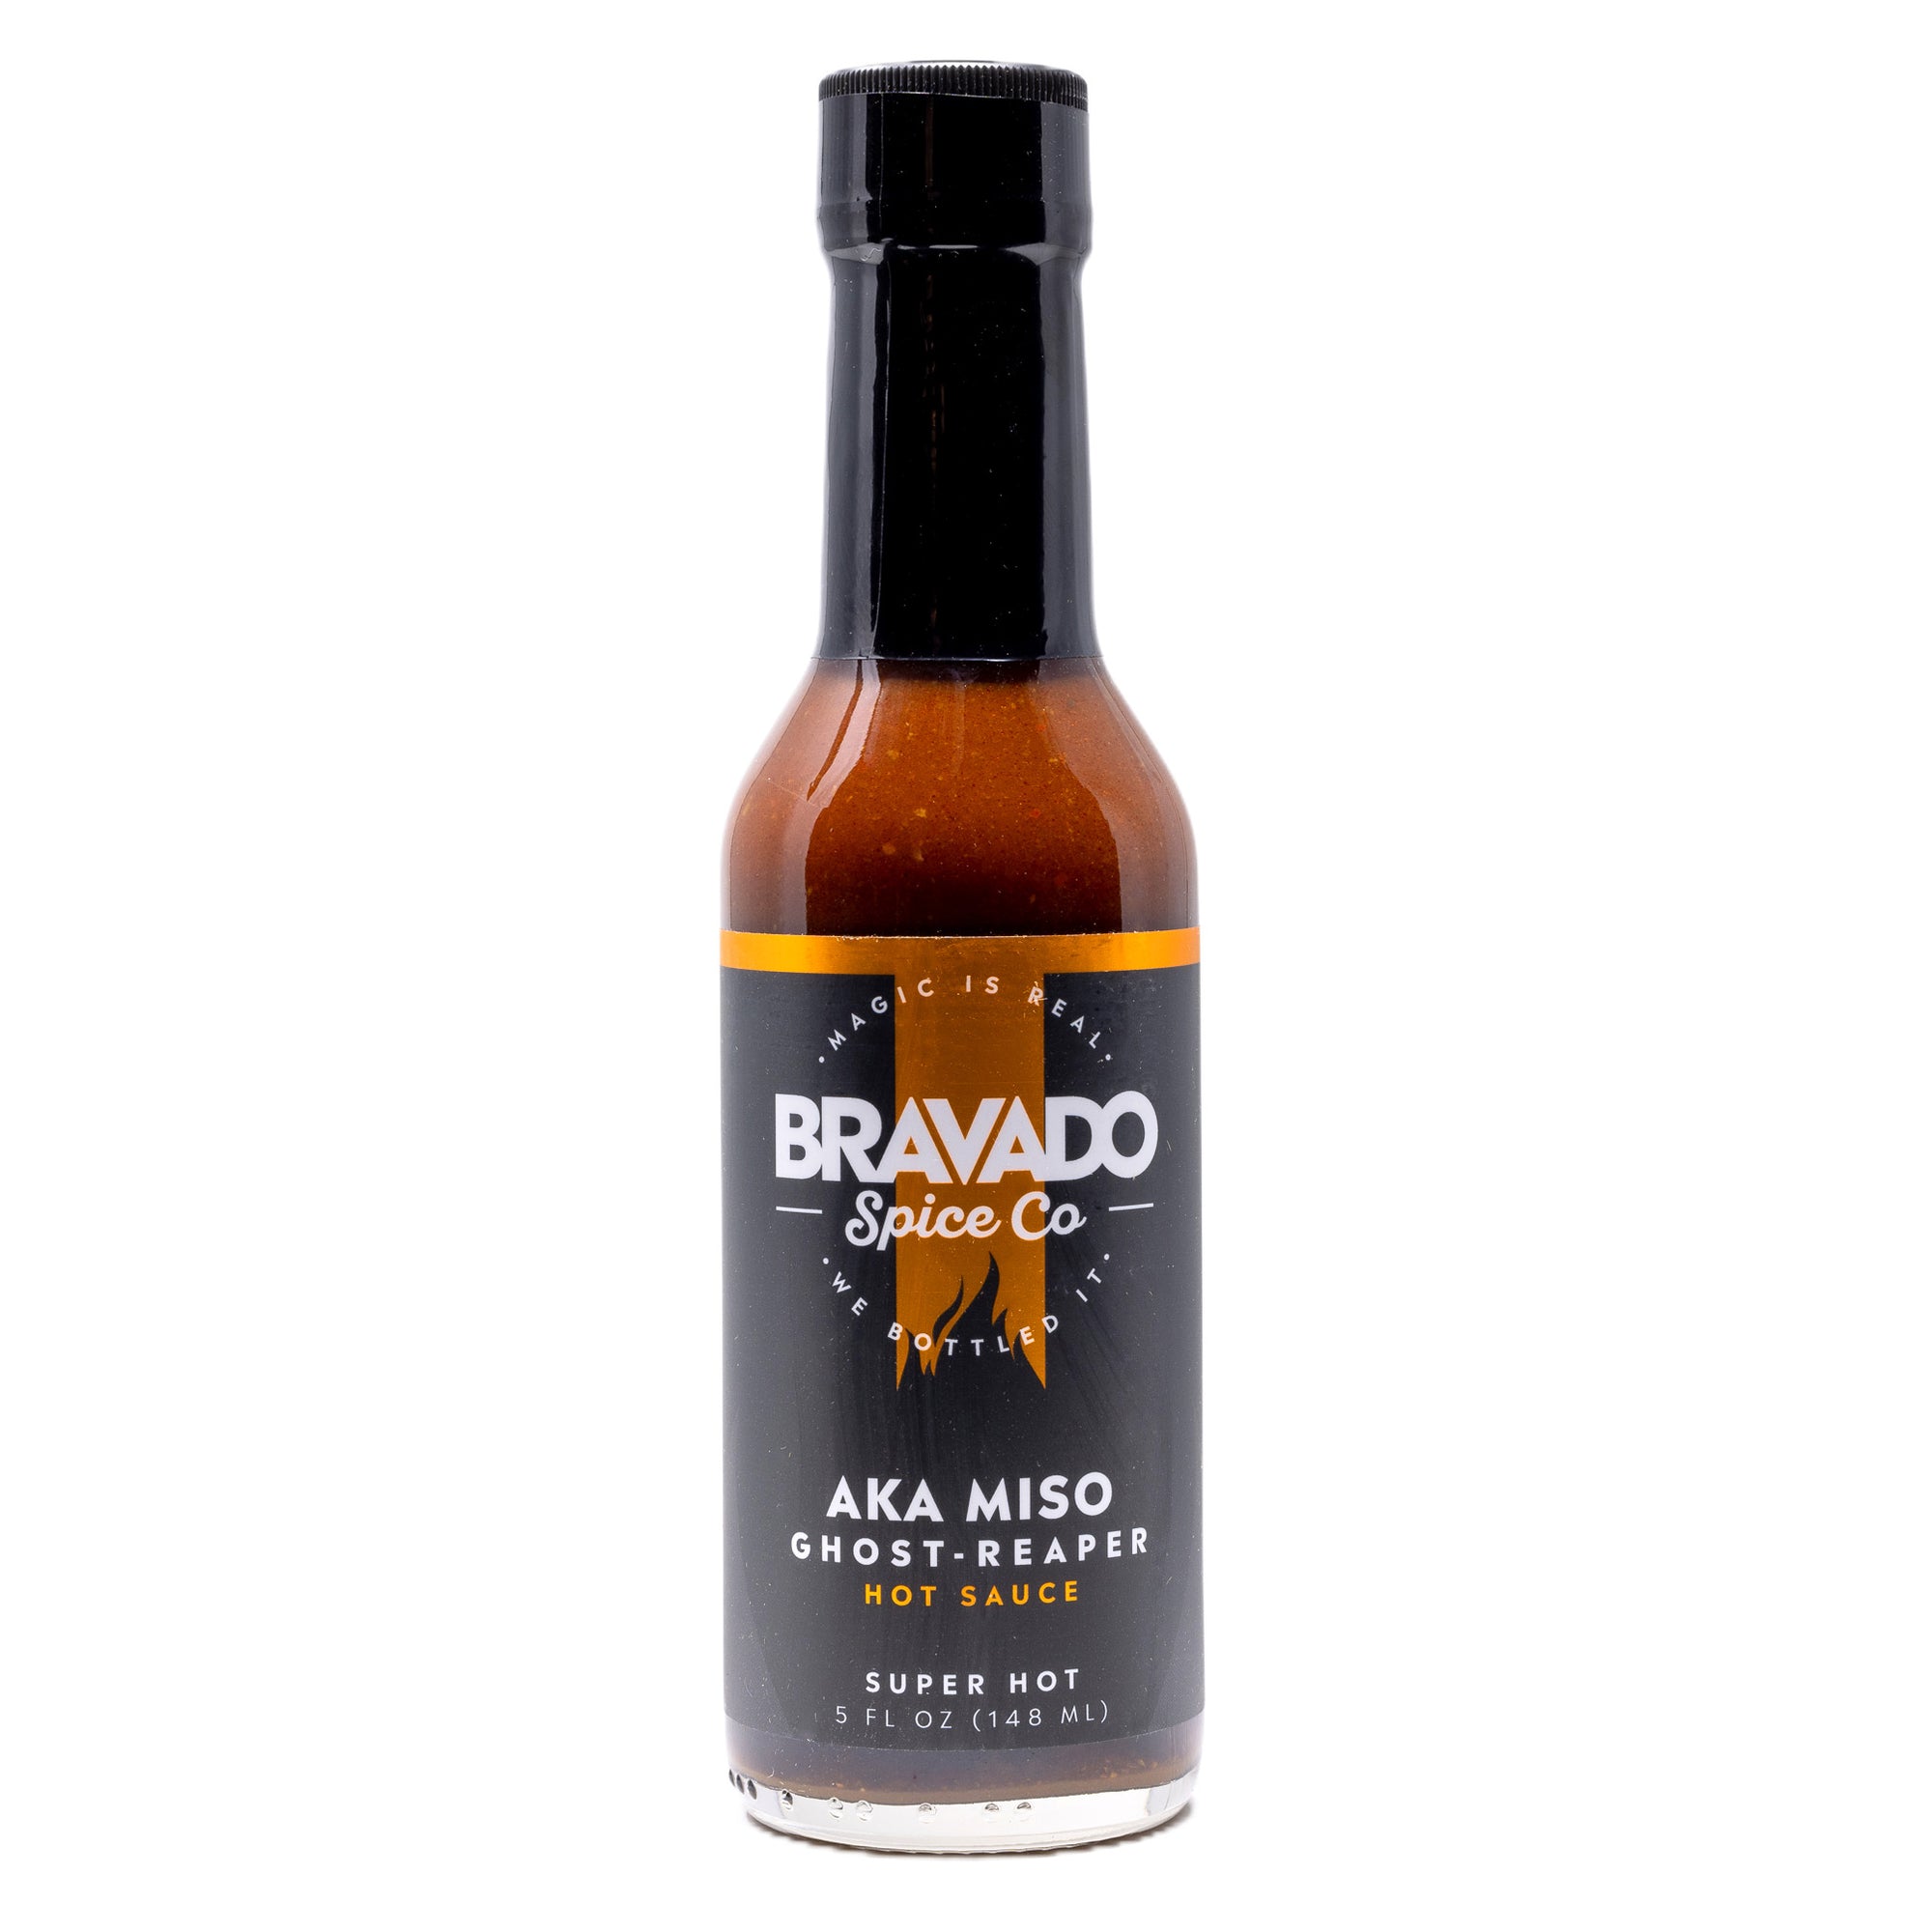 Bravado Spice Co. Aka Miso Reaper and Ghost Hot Sauce Spicy Sauce Bravado